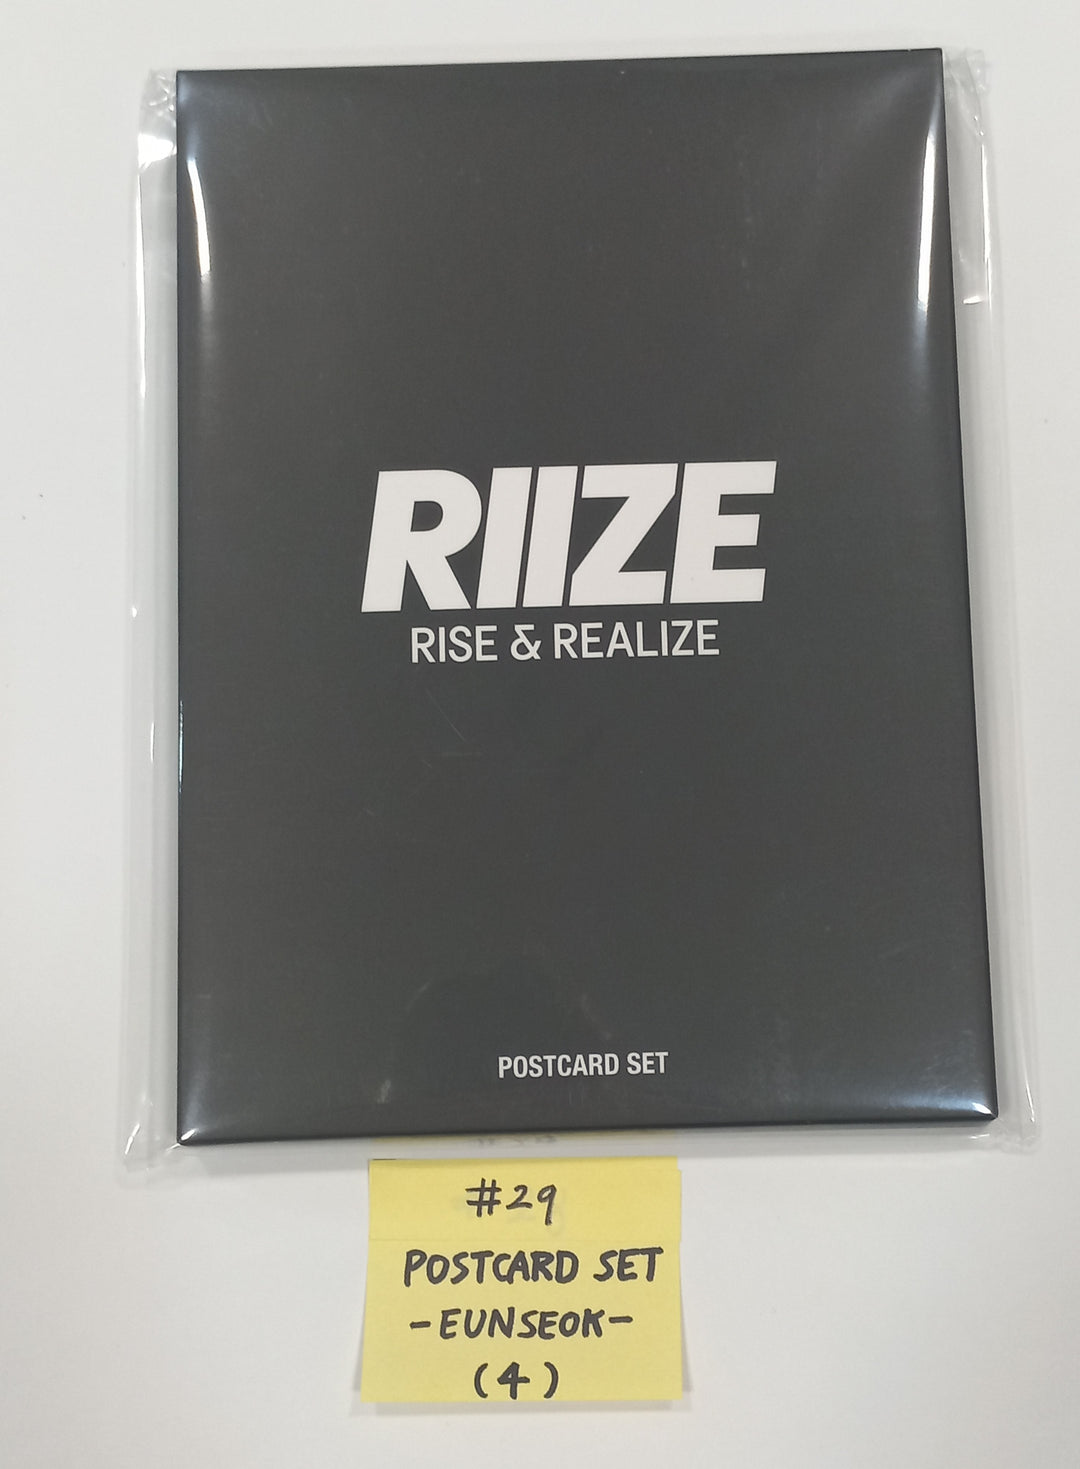 RIIZE - 「RIIZE UP」ポップアップストア MD [A3ポスター、ポストカードセット、スローガン+フォトカードセット、ミニ扇子+フォトセット、アクリルターニングスタンドセット、重ねフォトカードセット、フォトホルダー+カットフォト4枚セット] [24.1.12] 】